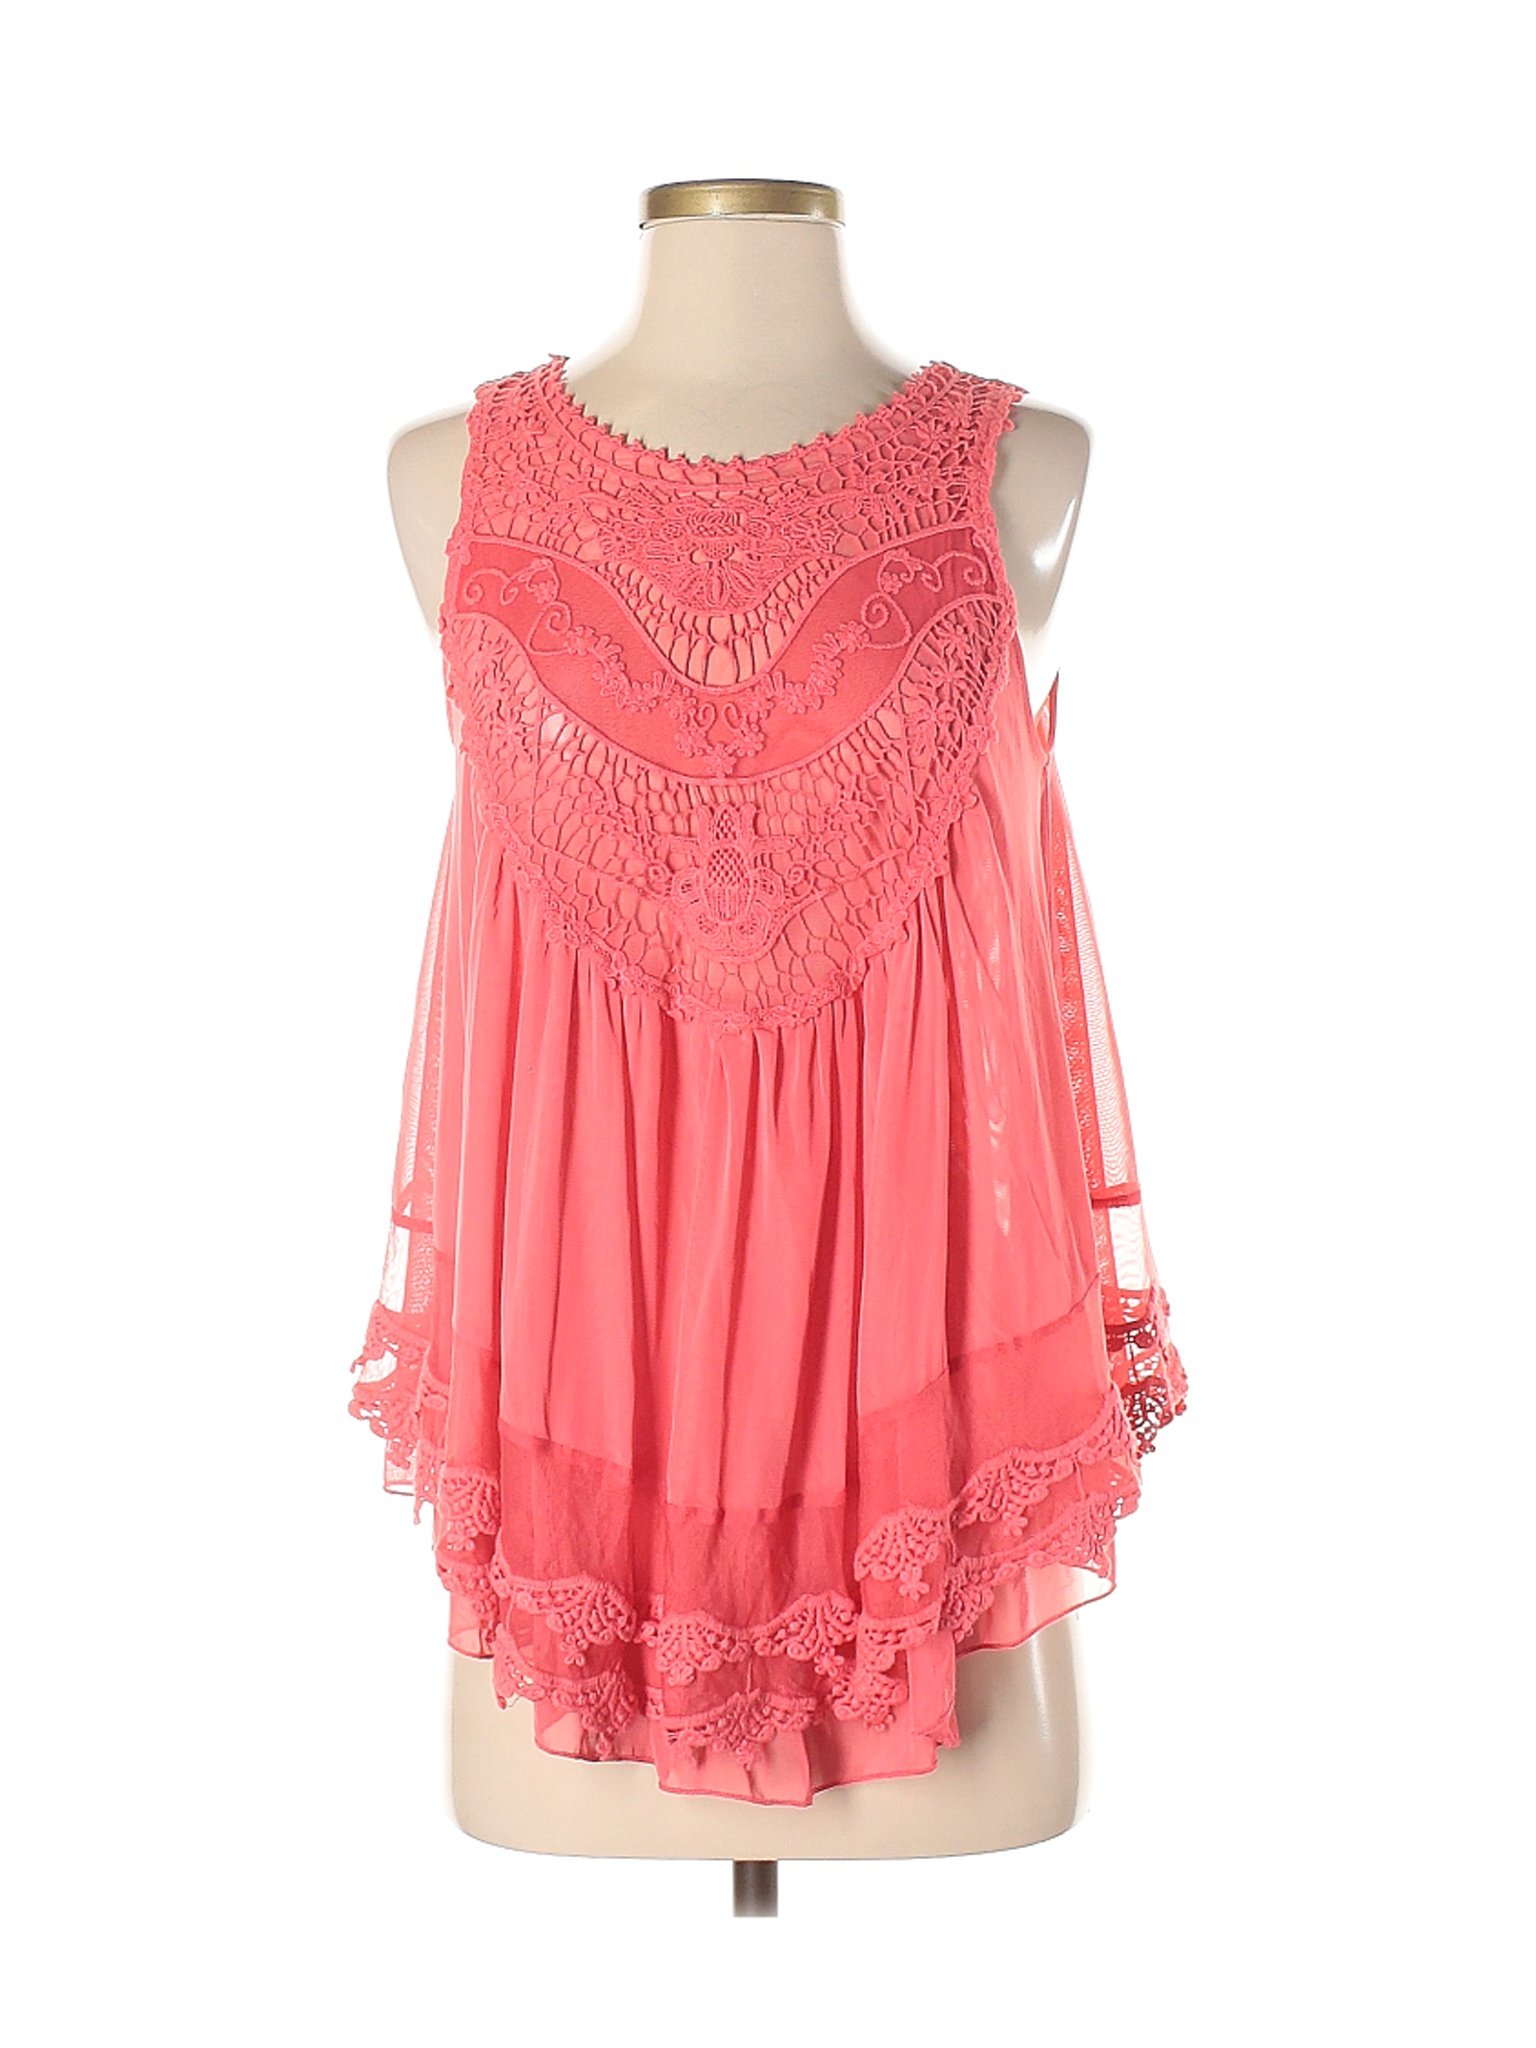 Ultra Pink Pink Sleeveless Top Size S - 58% off | thredUP